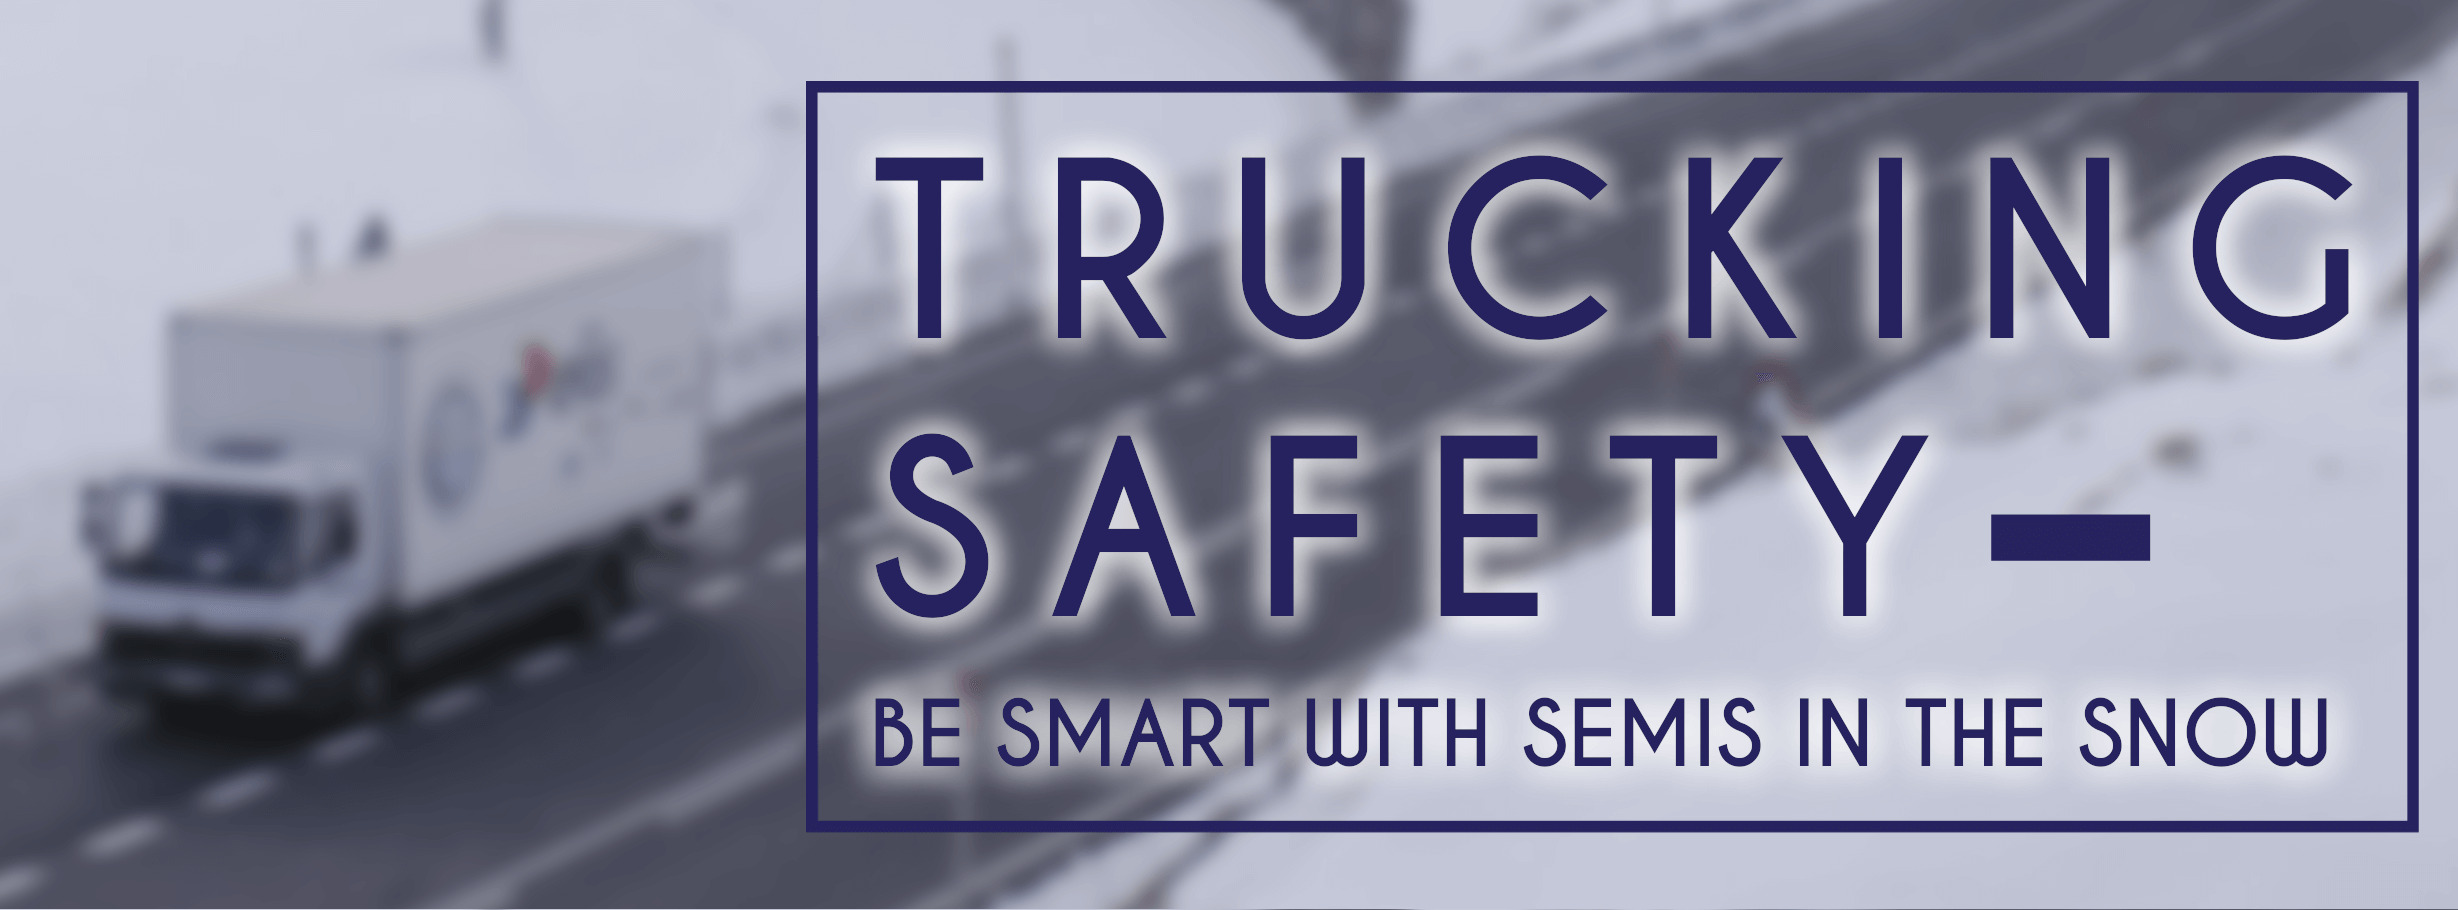 Semis Trucking Safety - Semis in Snow